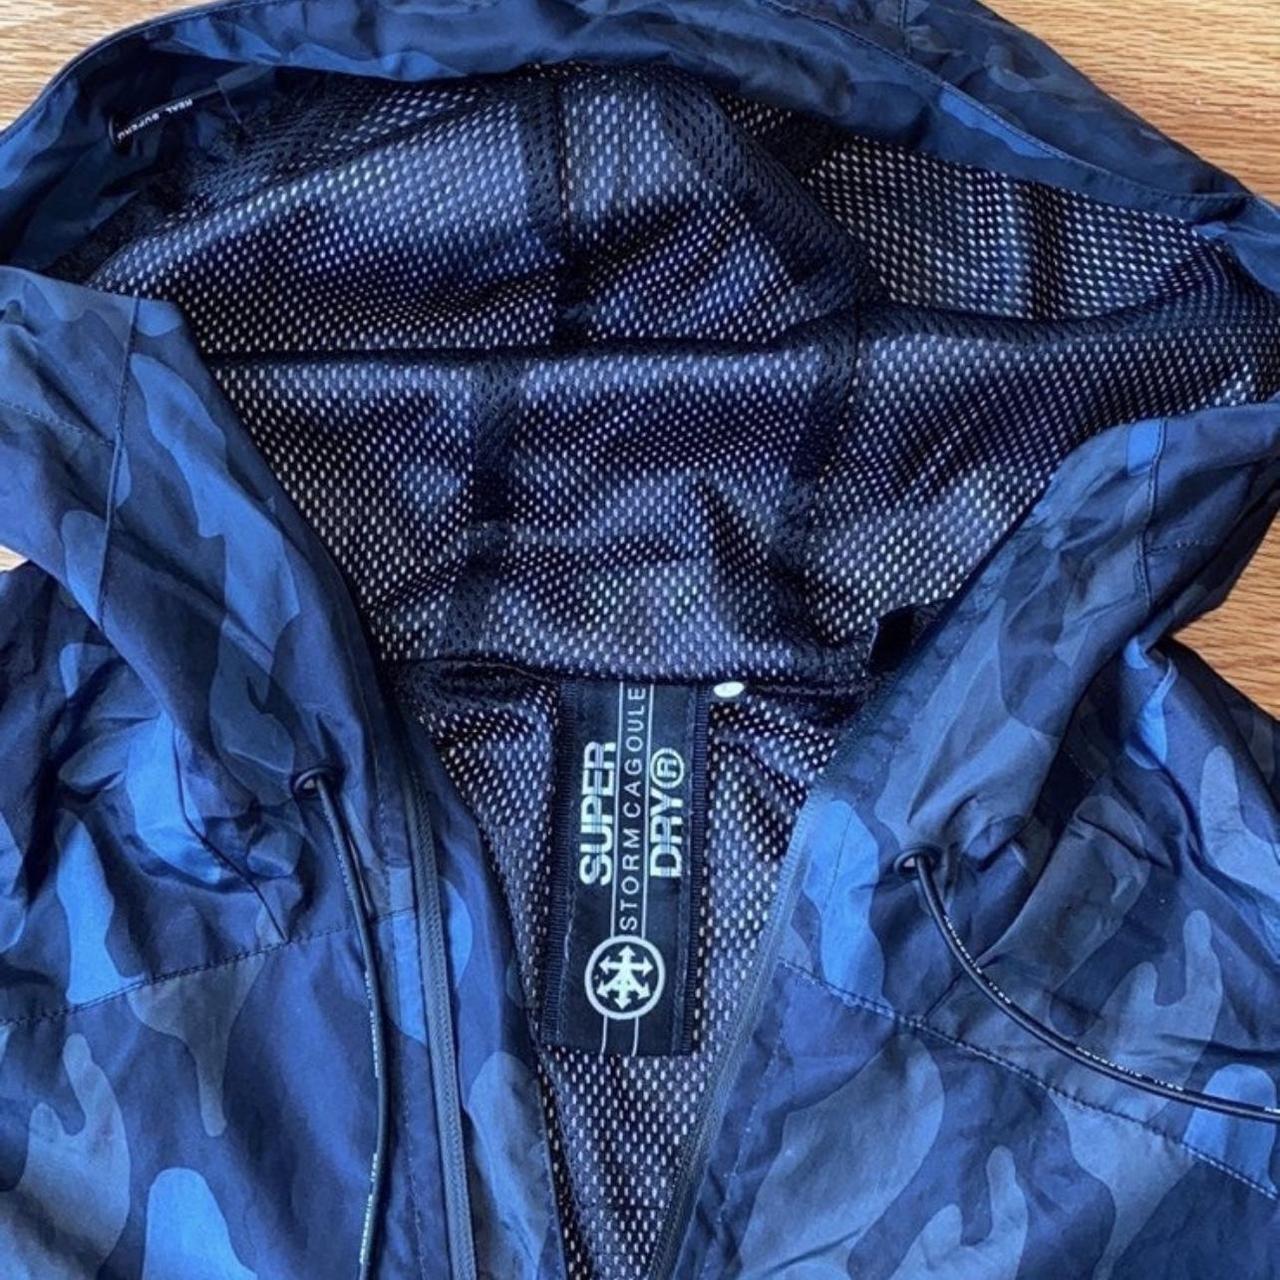 Product Image 2 - SUPERDRY Men’s rain jacket
Excellent condition